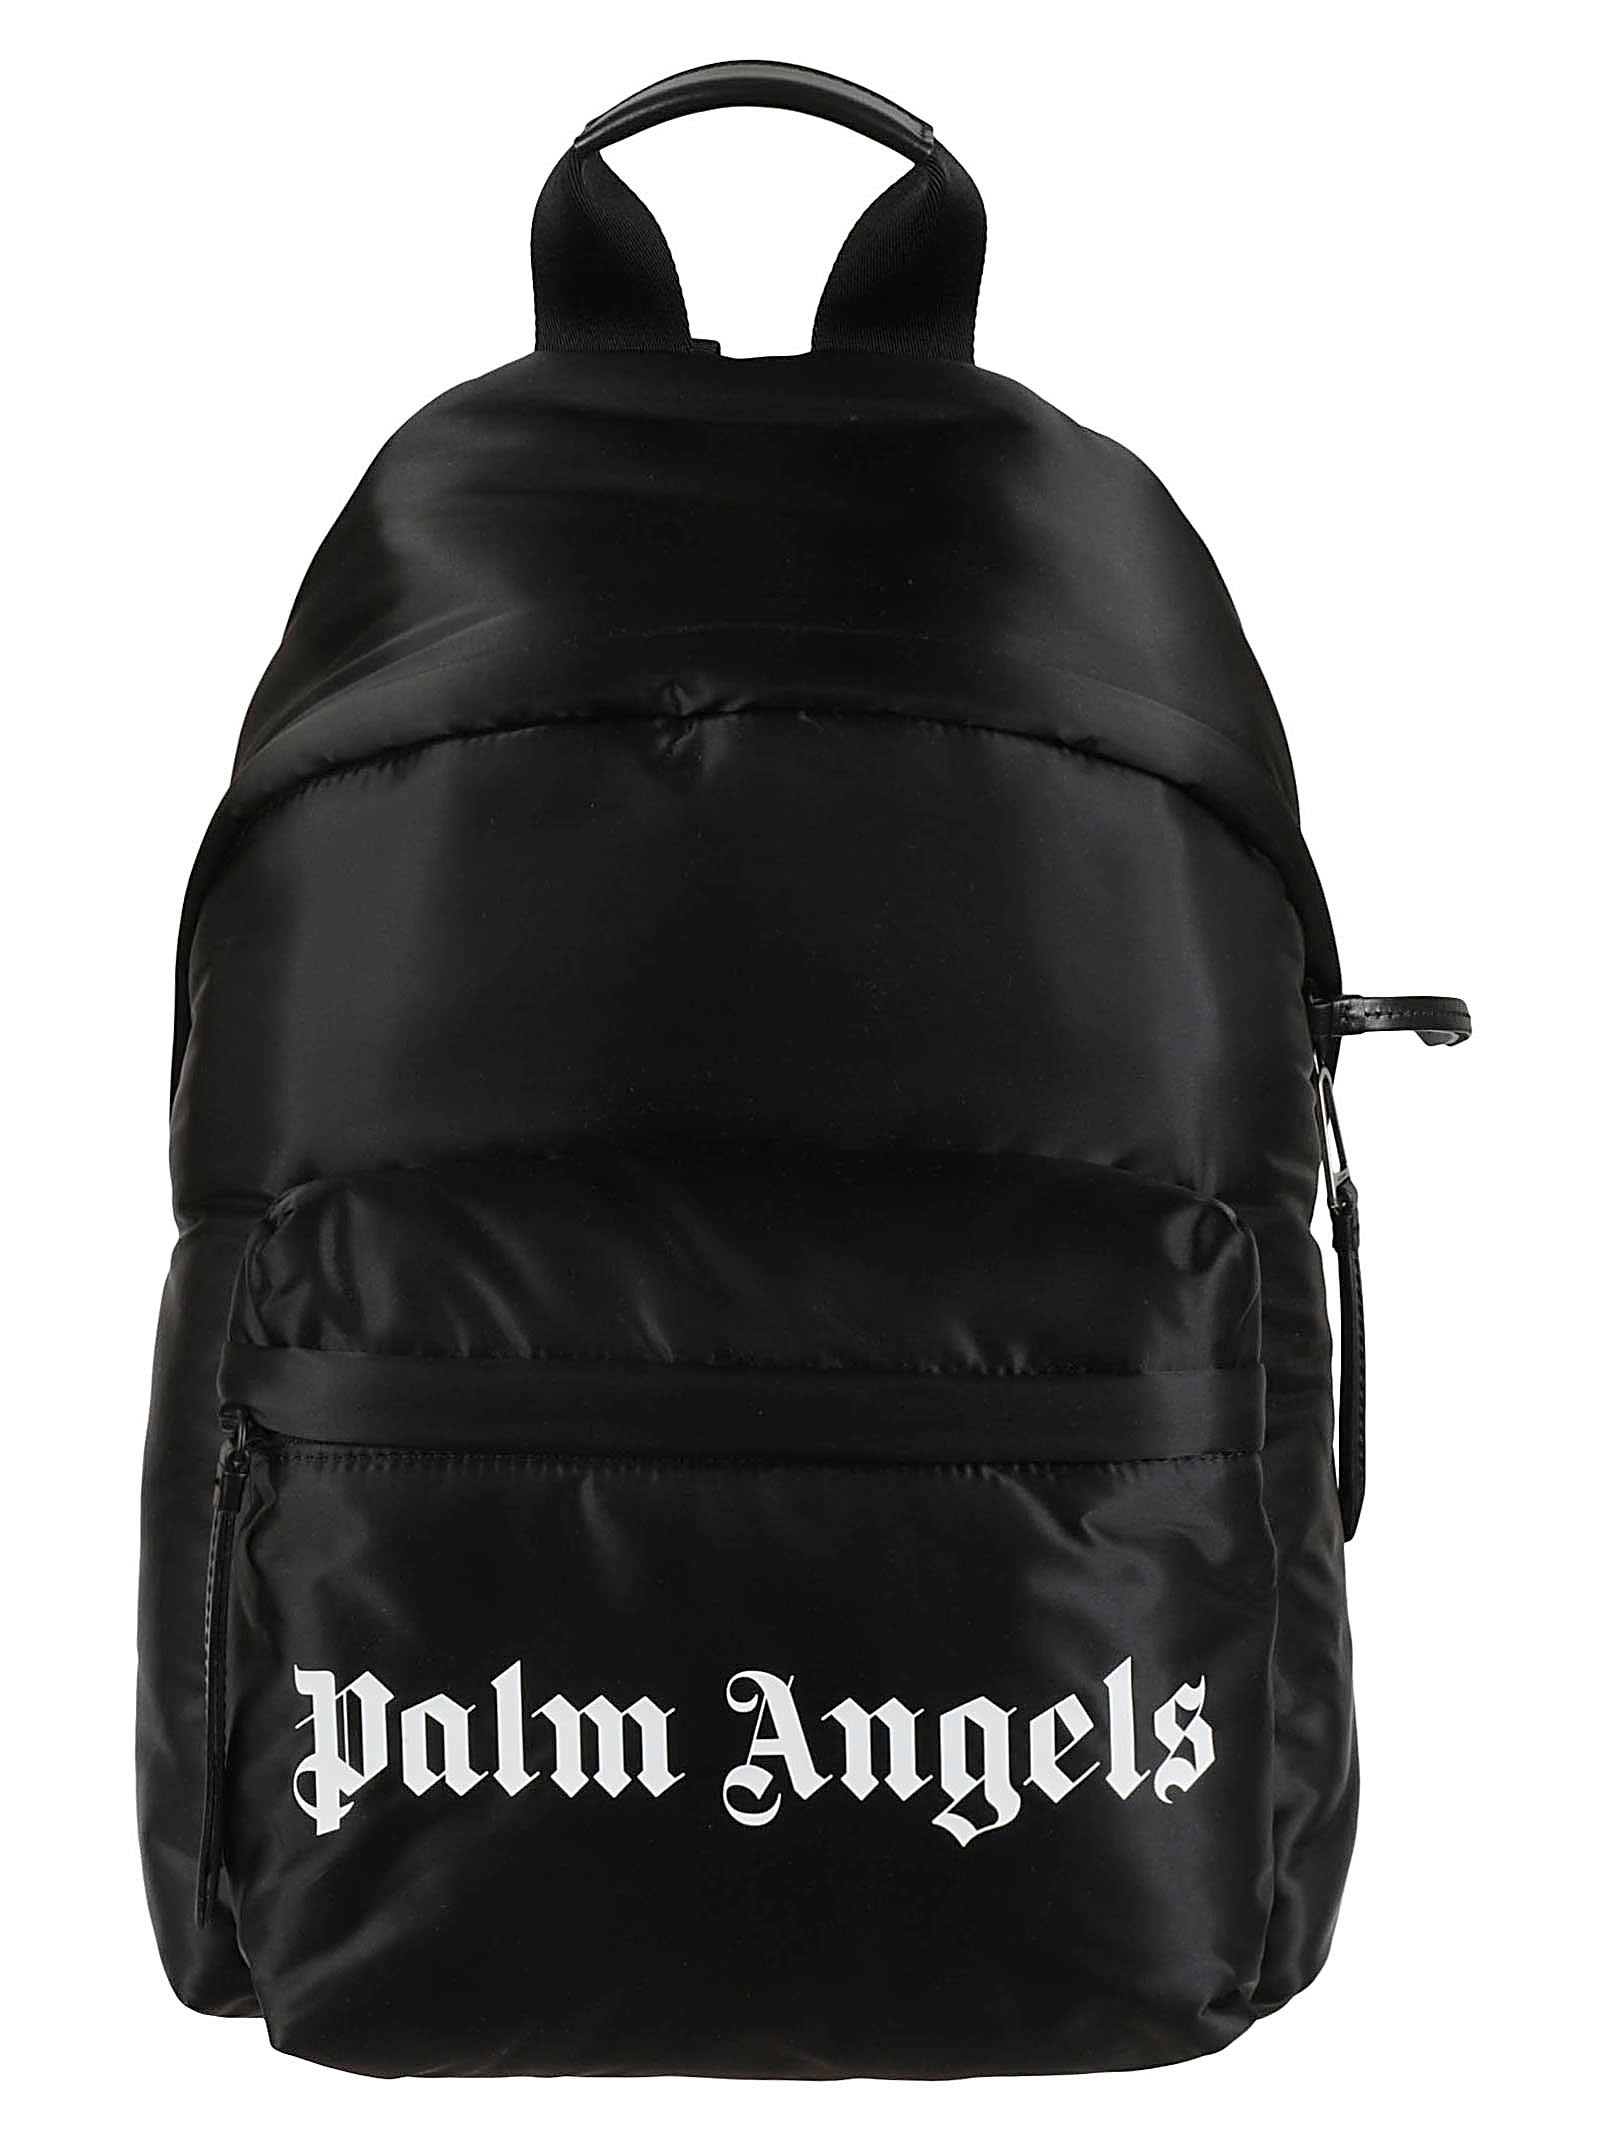 Palm Angels Nylon Backpack